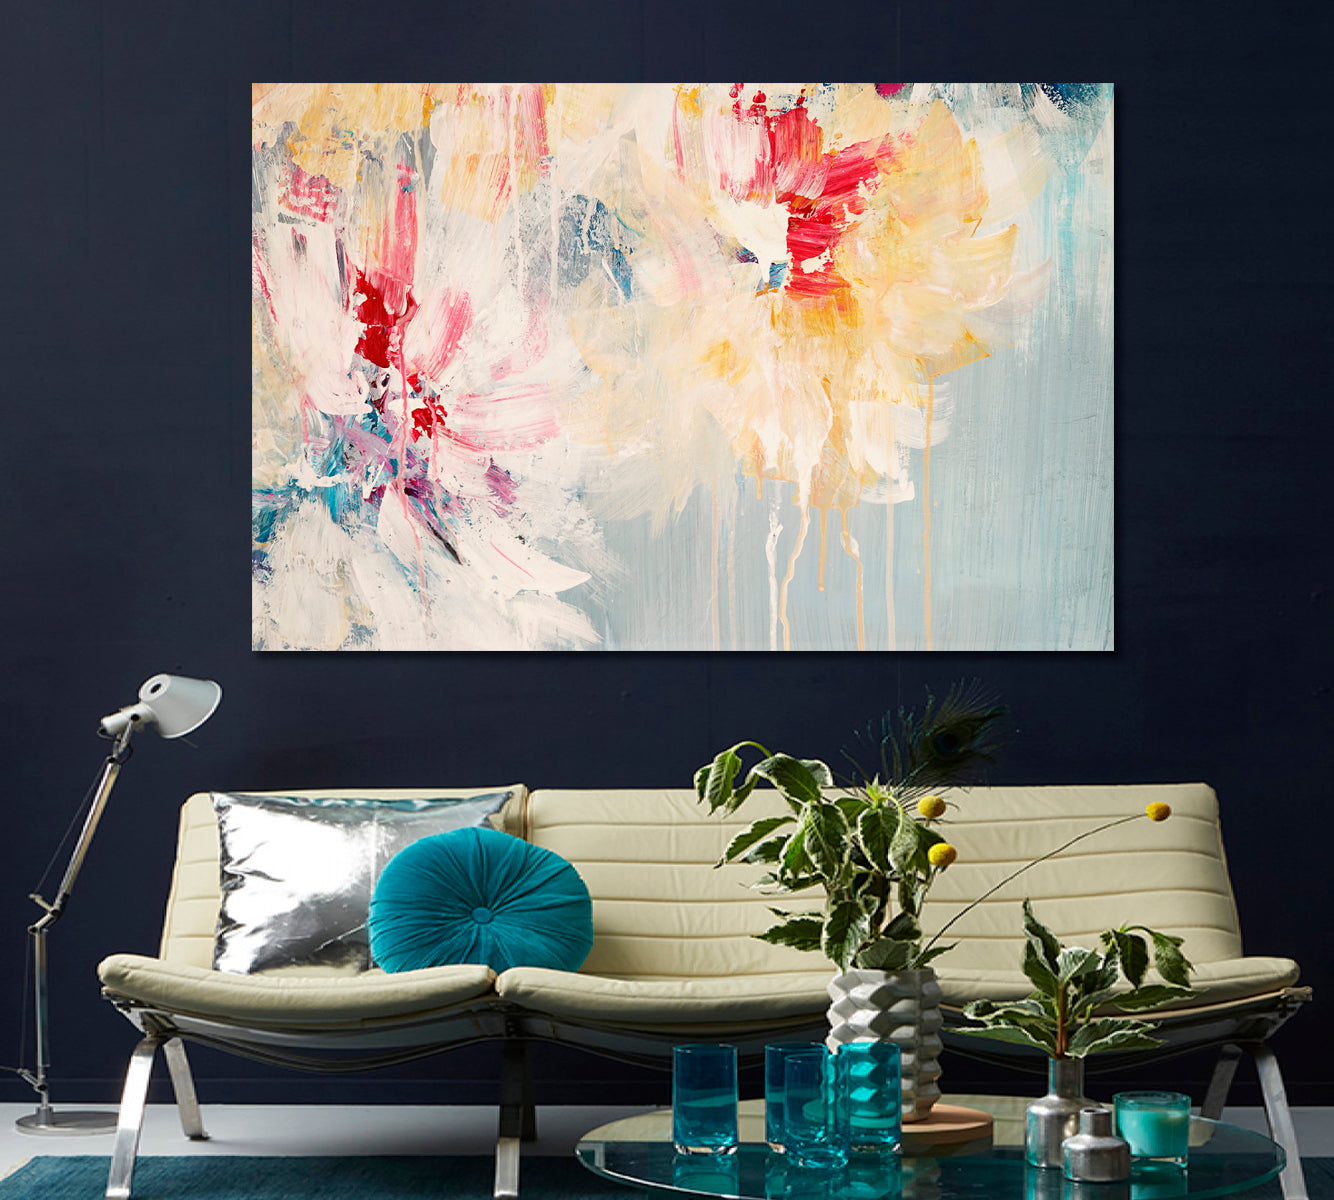 FINE ART Modern Abstract Colorful Acrylic on Canvas Artwork Floral Style Canvas Print Fine Art Artesty   